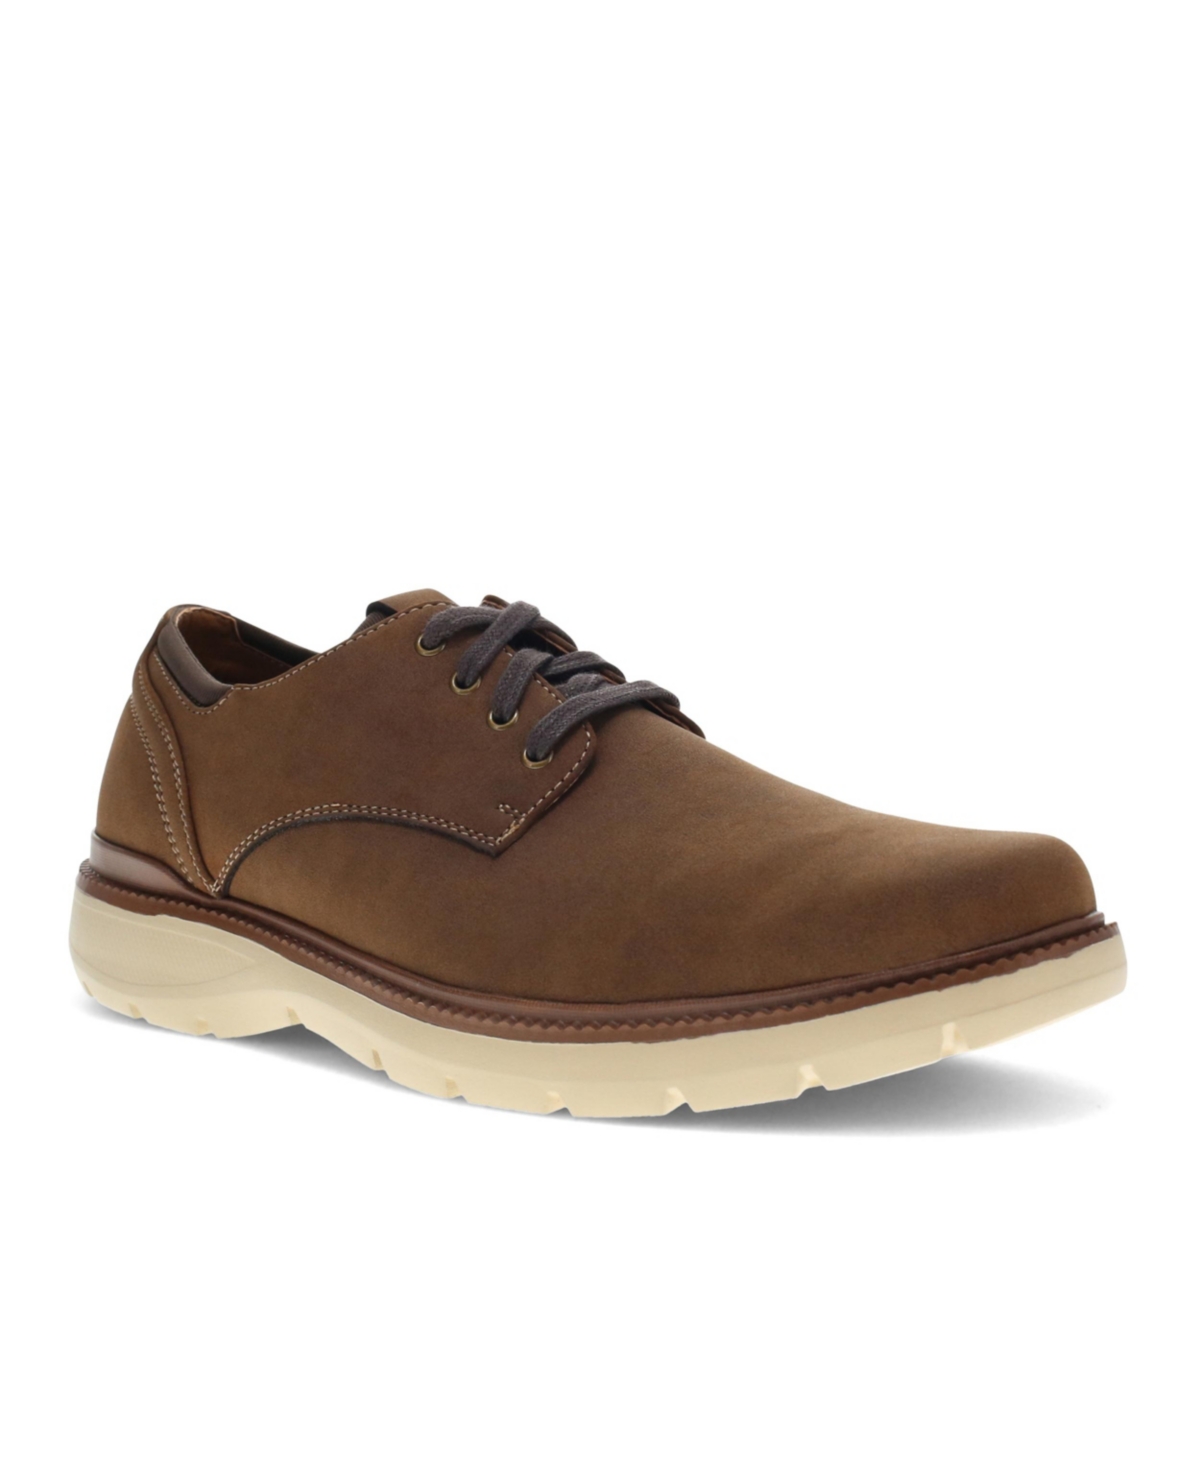 Men's Rustin Oxford Shoes - Brown